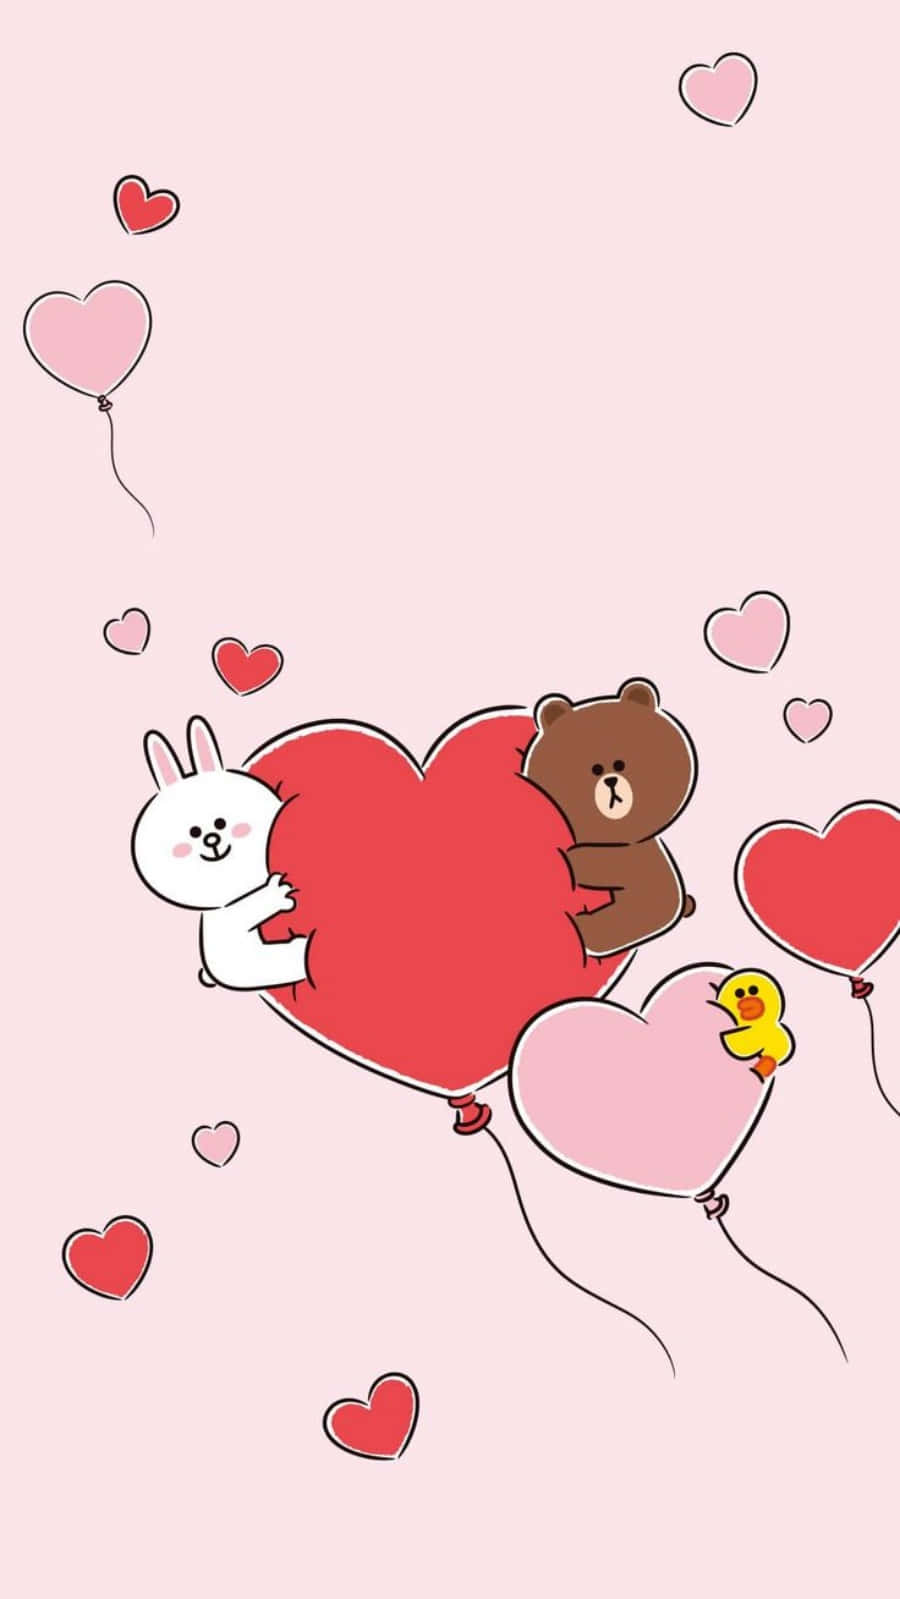 Cute Cartoon Heart on Pink Background Wallpaper